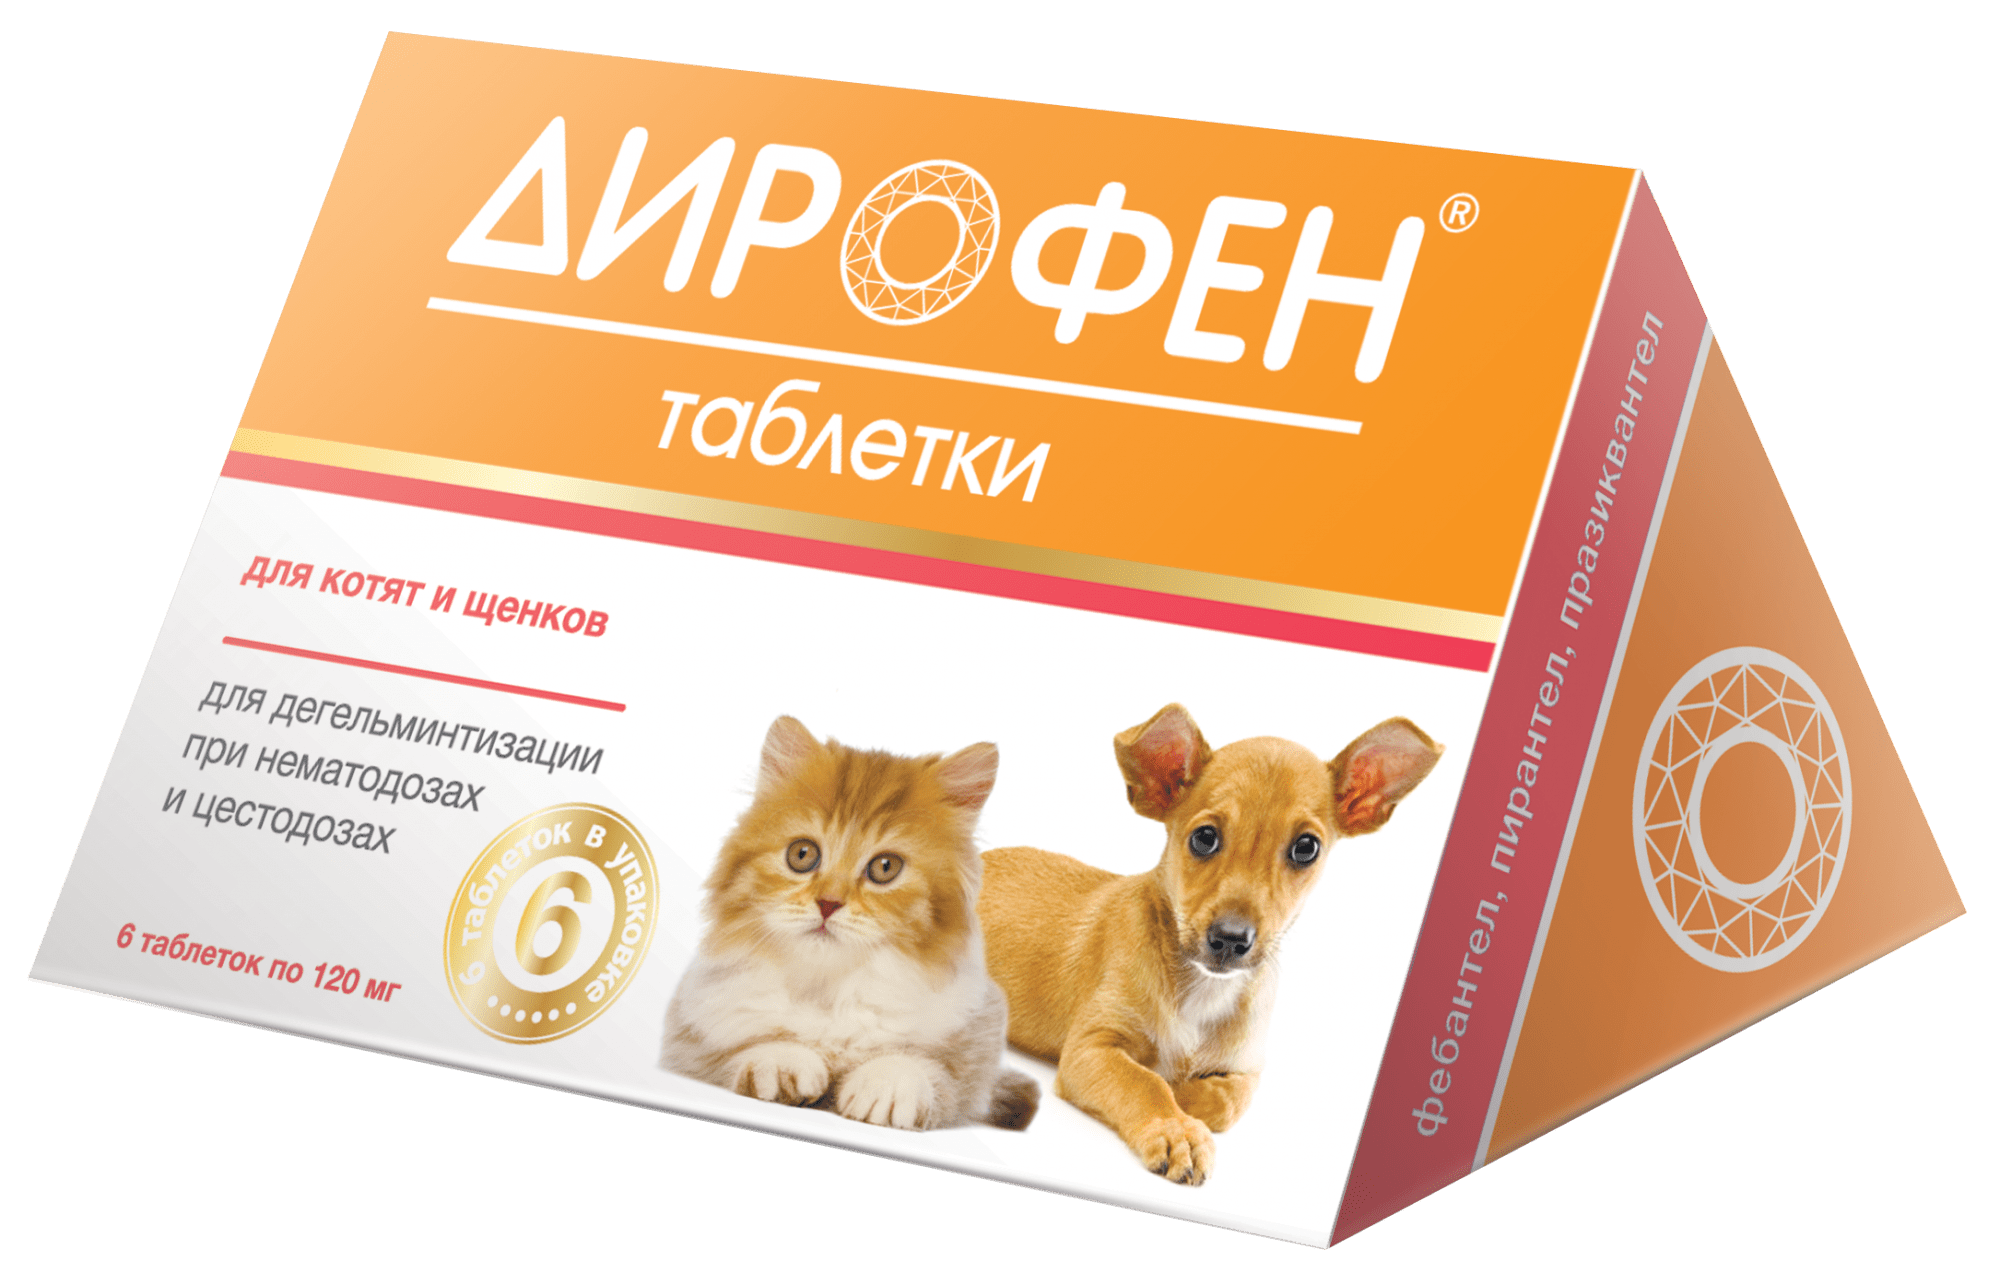 Антигельминтик для котят и щенков APICENNA Дирофен, 6 таблеток по 120 мг